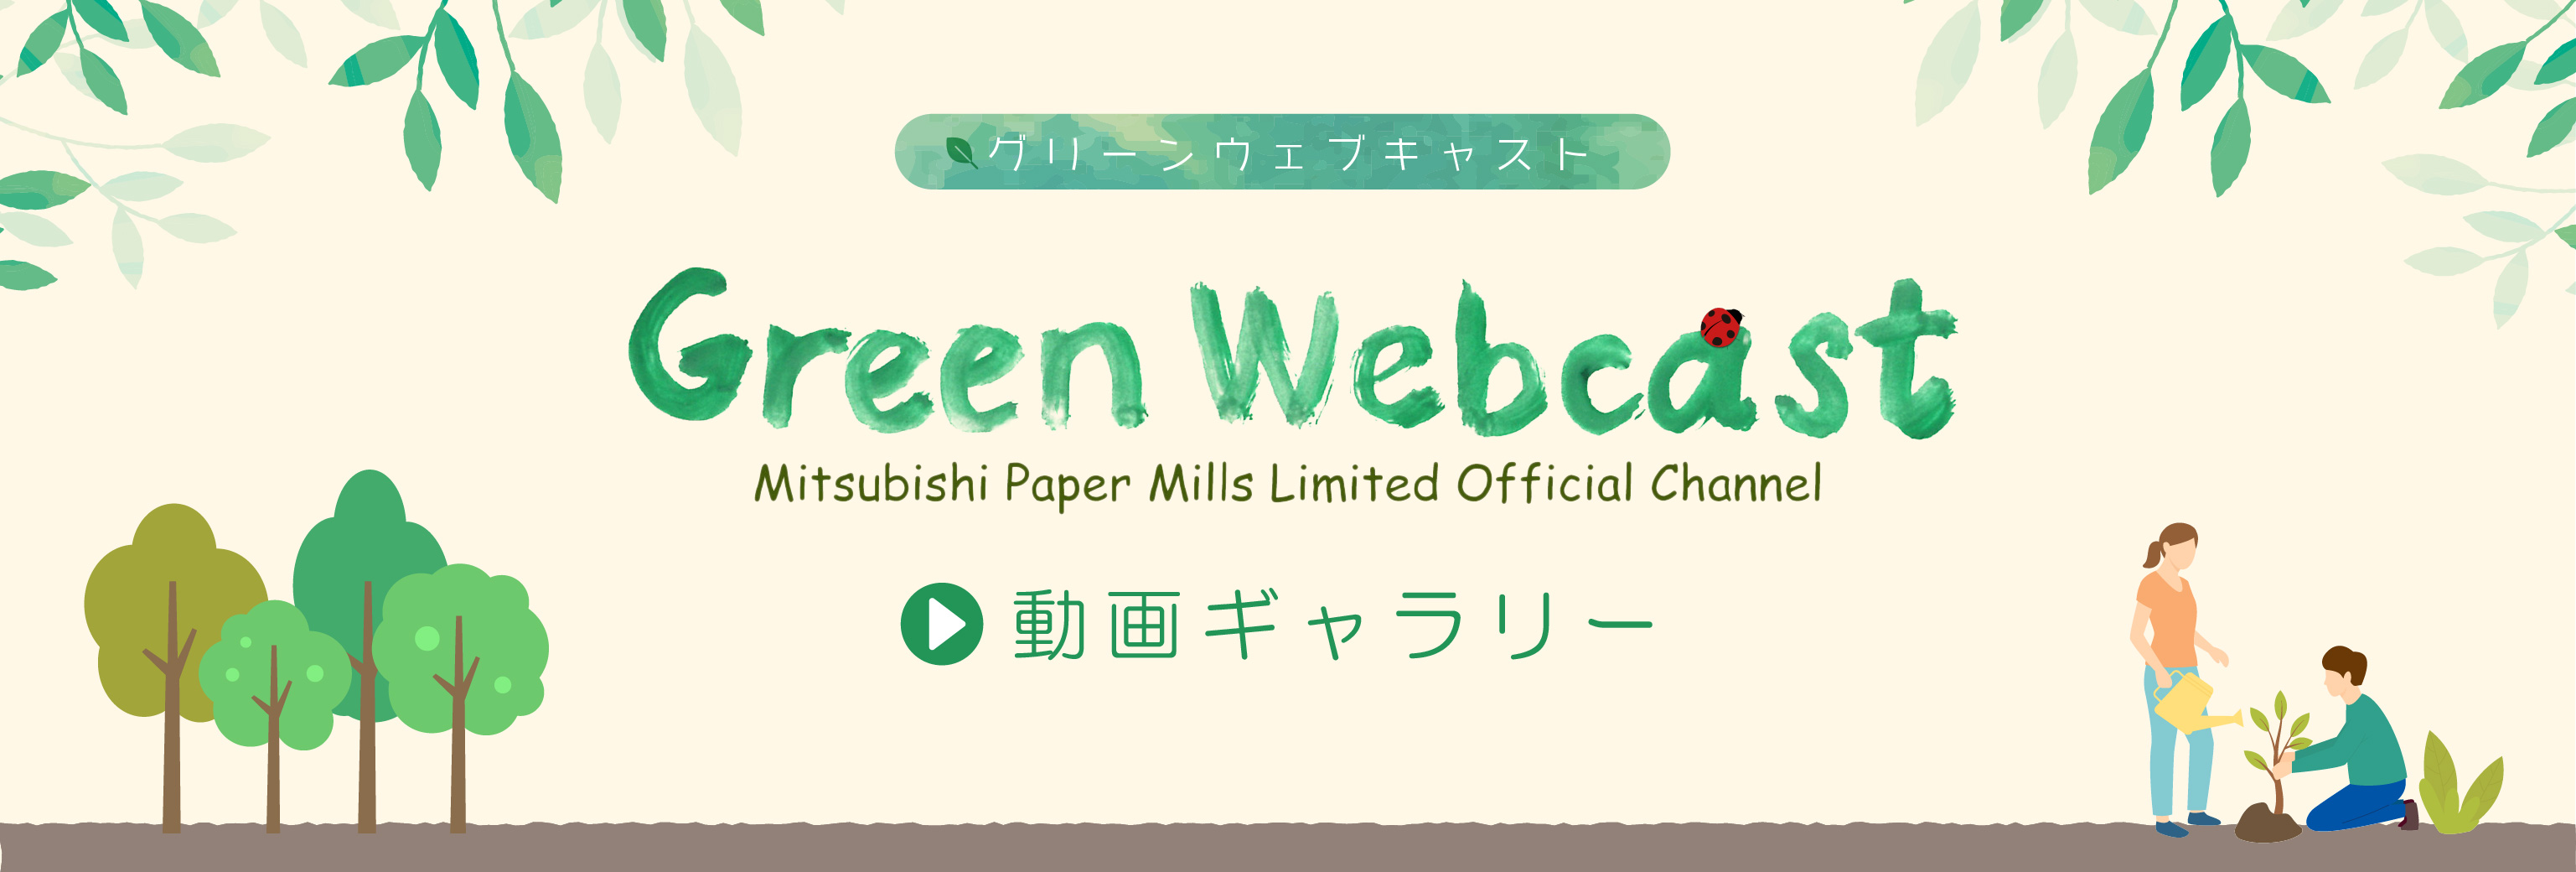 Green Webcast